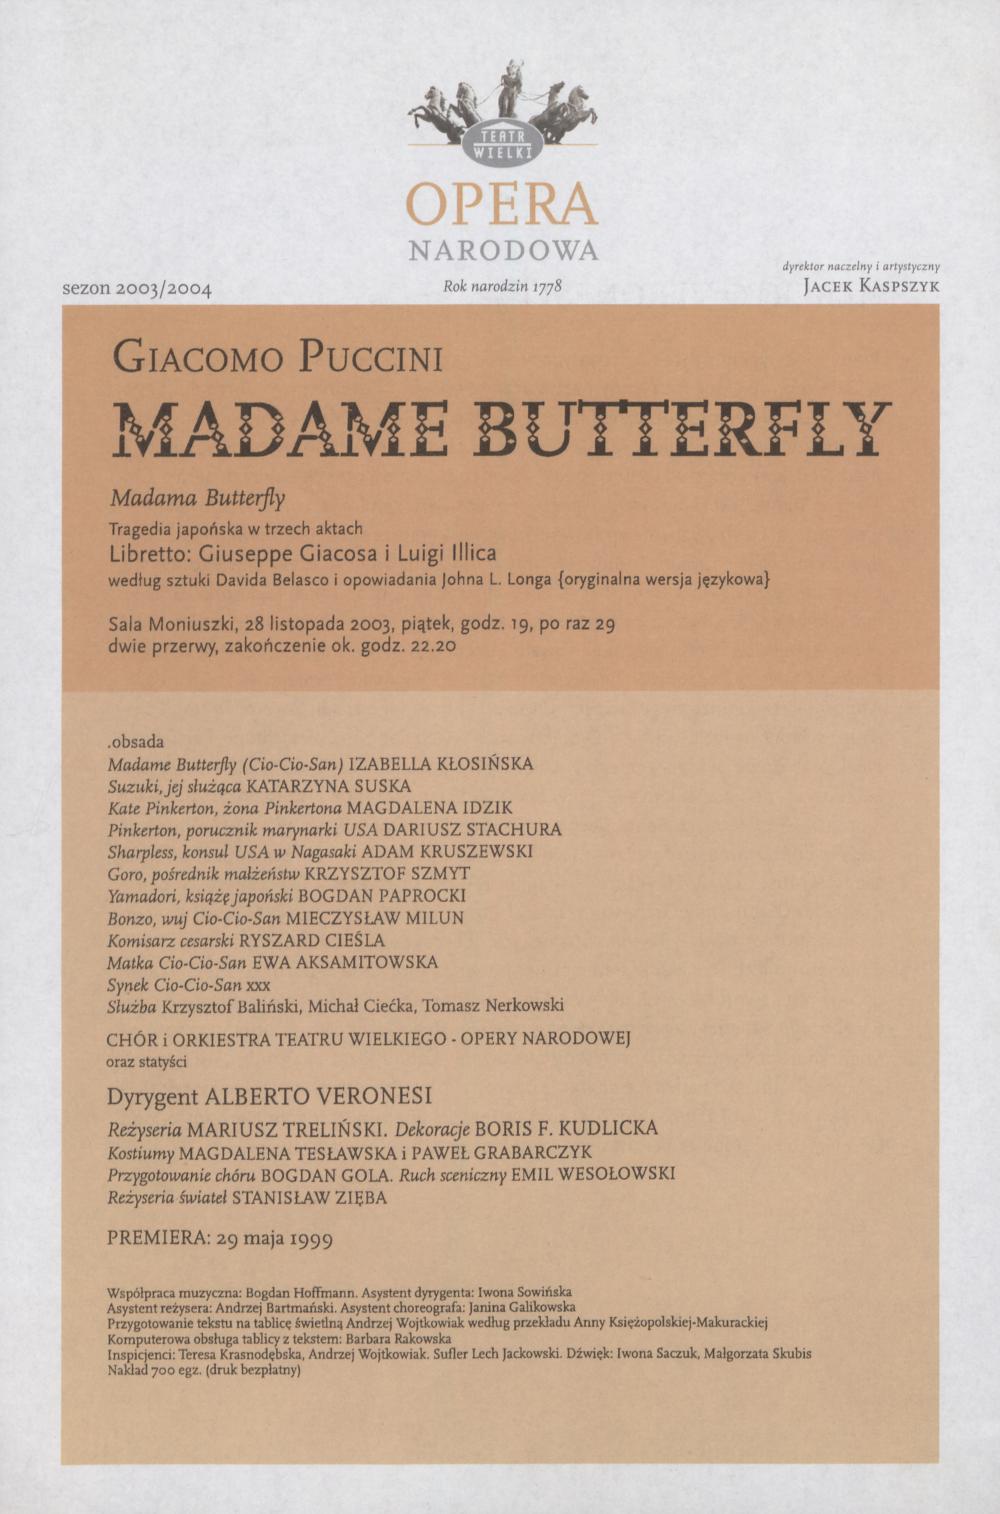 Wkładka obsadowa „Madame Butterfly” Giacomo Puccini 28-11-2003